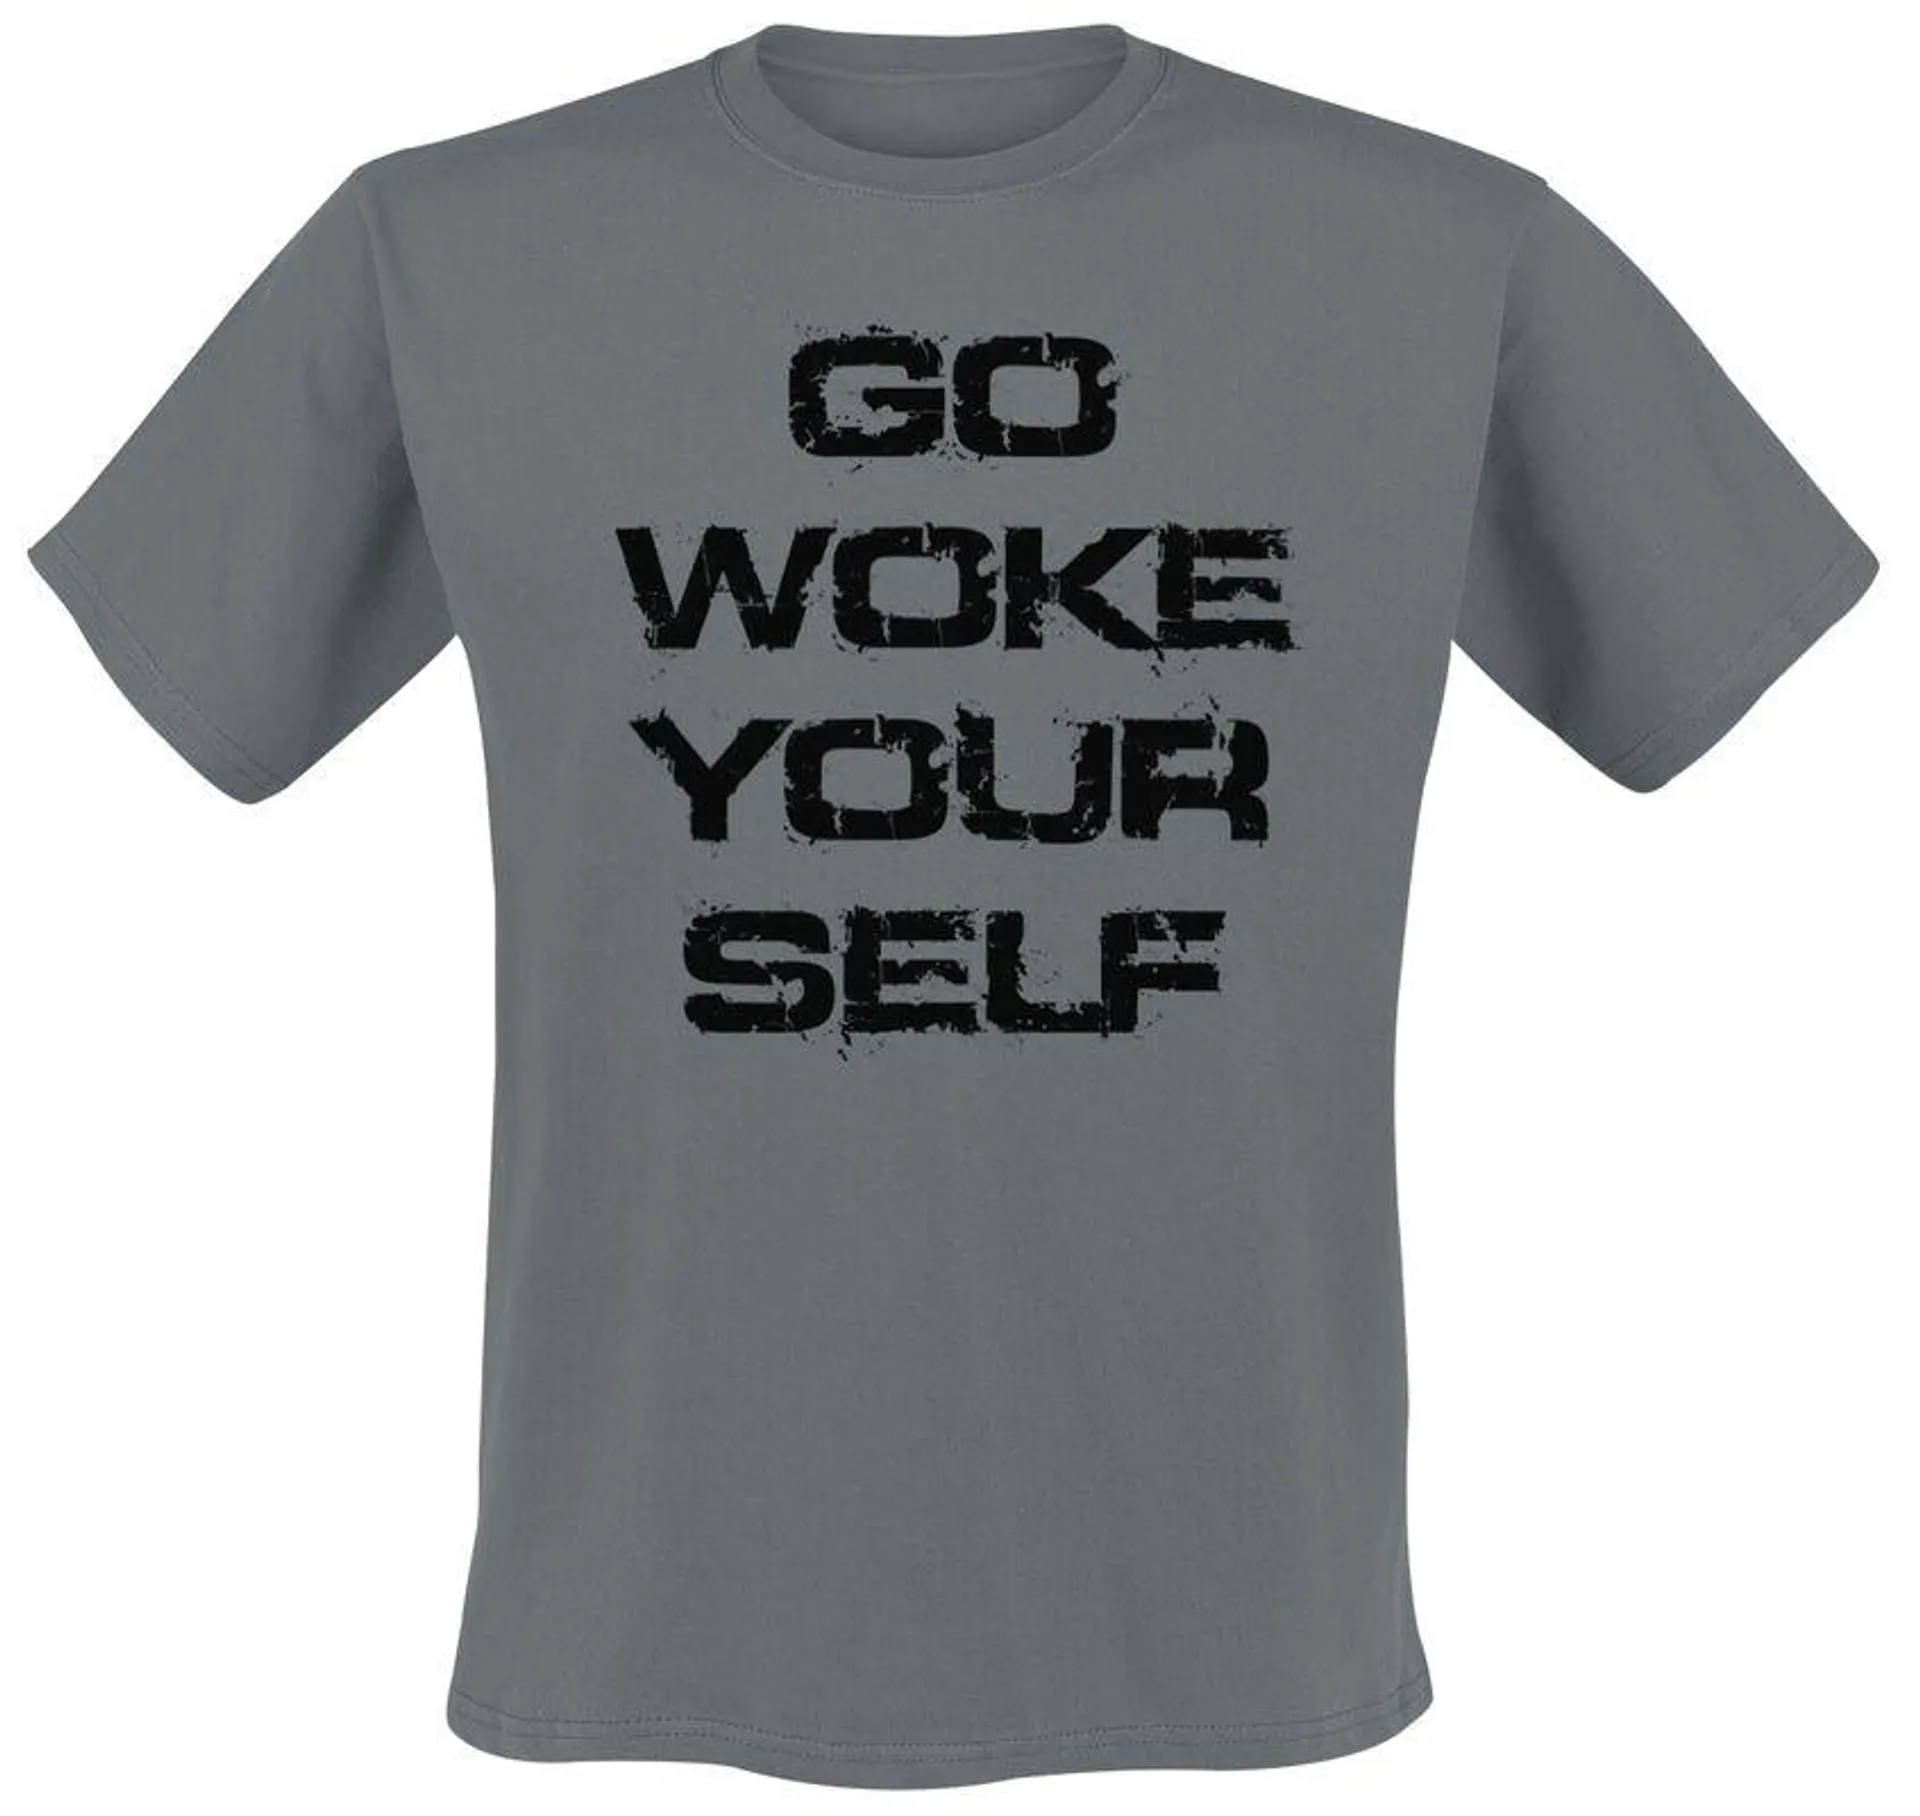 "Go woke yourself" Camiseta Gris oscuro de Slogans